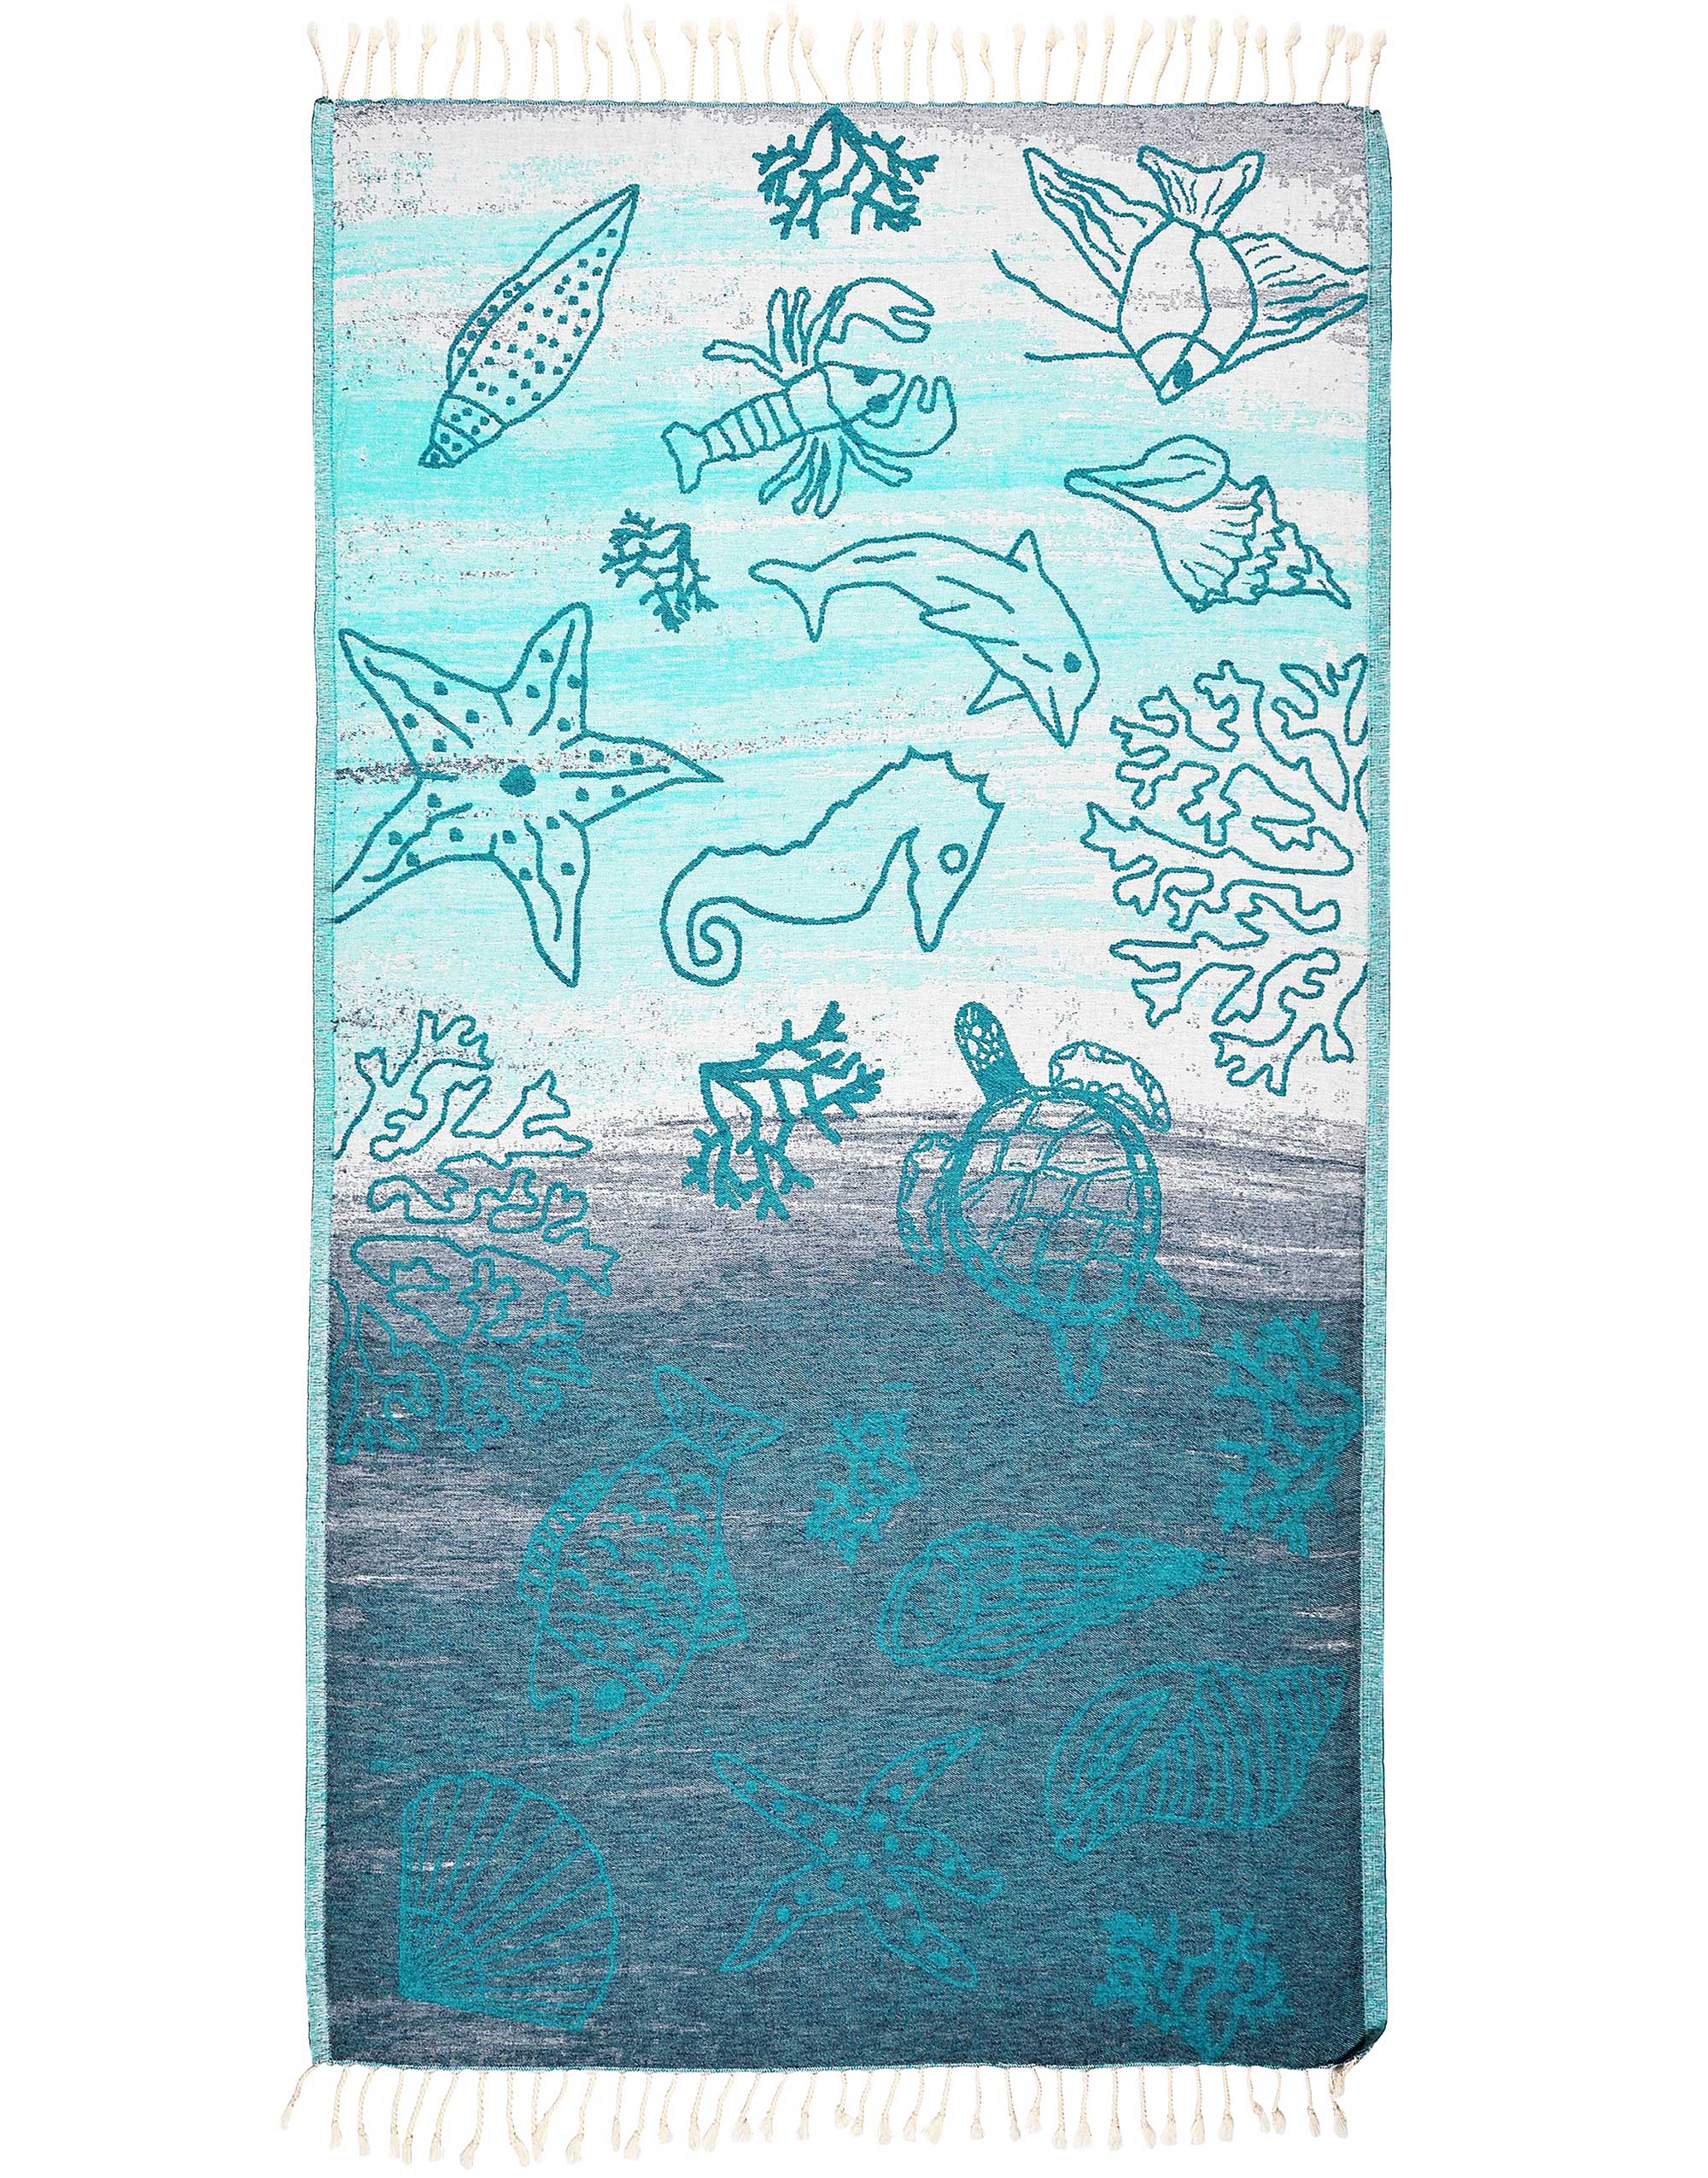 Cacala Turkish Beach Towel Ocean Series 36” x 63” 100% Cotton